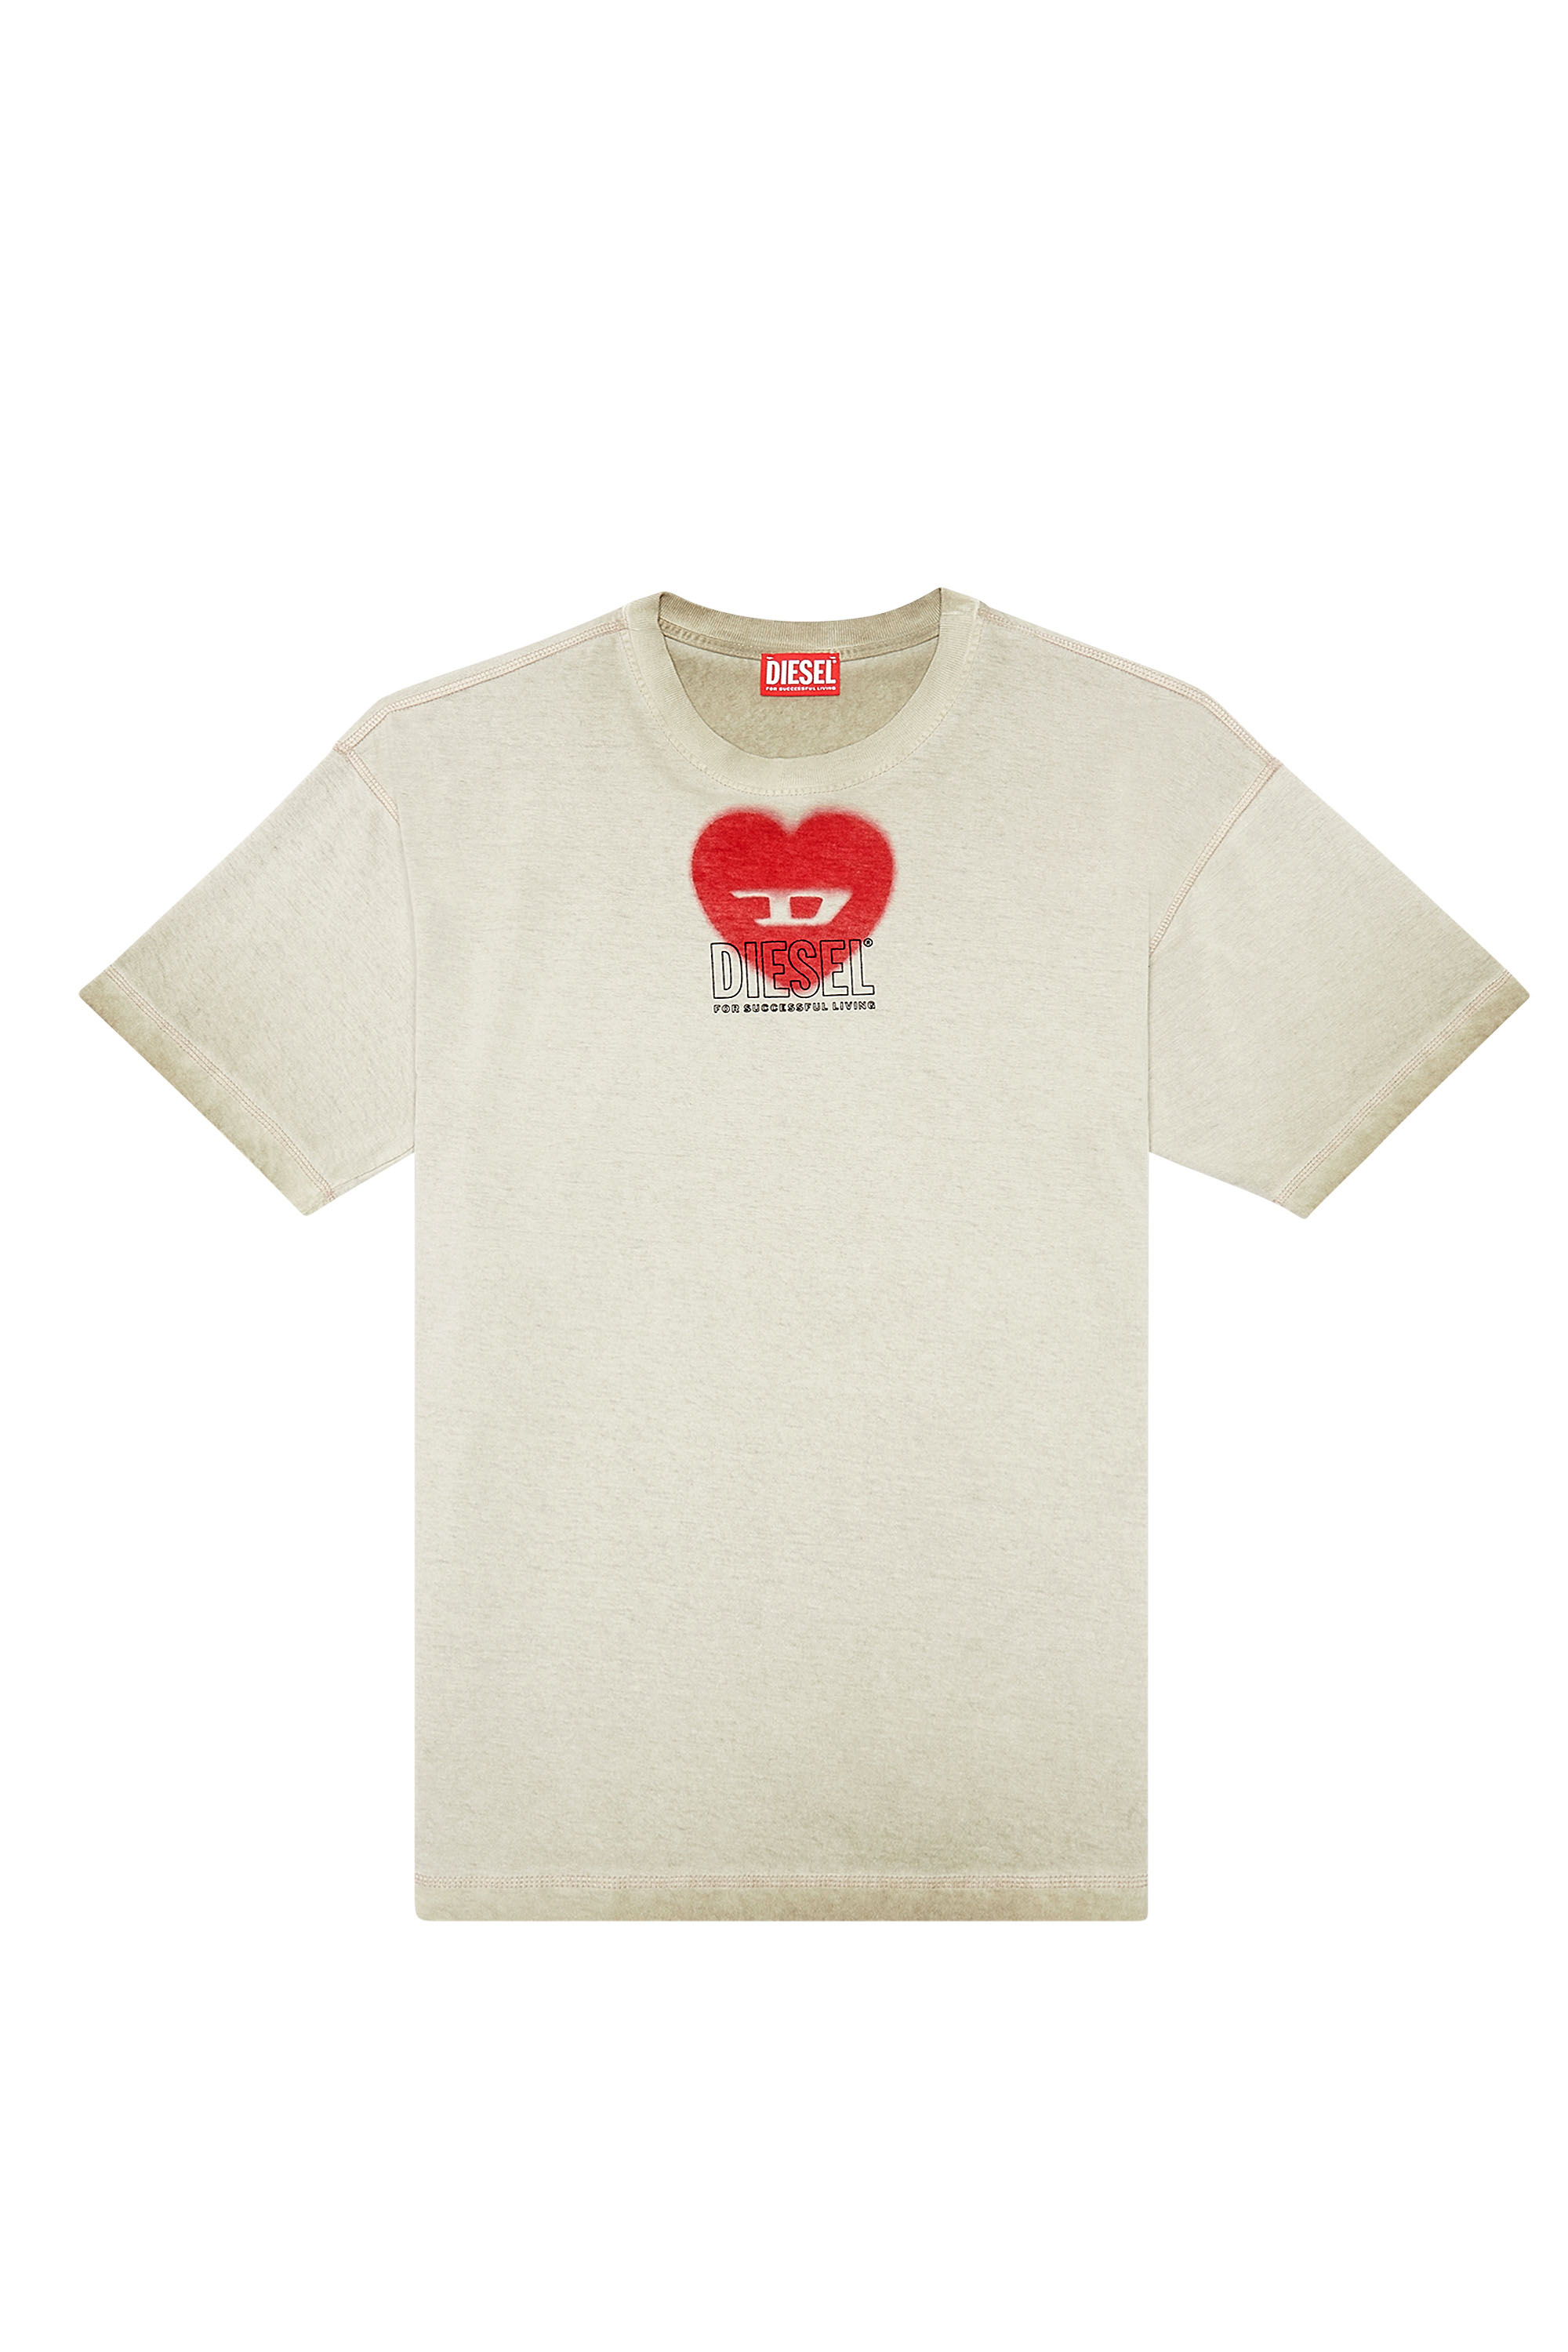 Diesel - T-BUXT-N4, Man T-shirt with heart print in Beige - Image 3